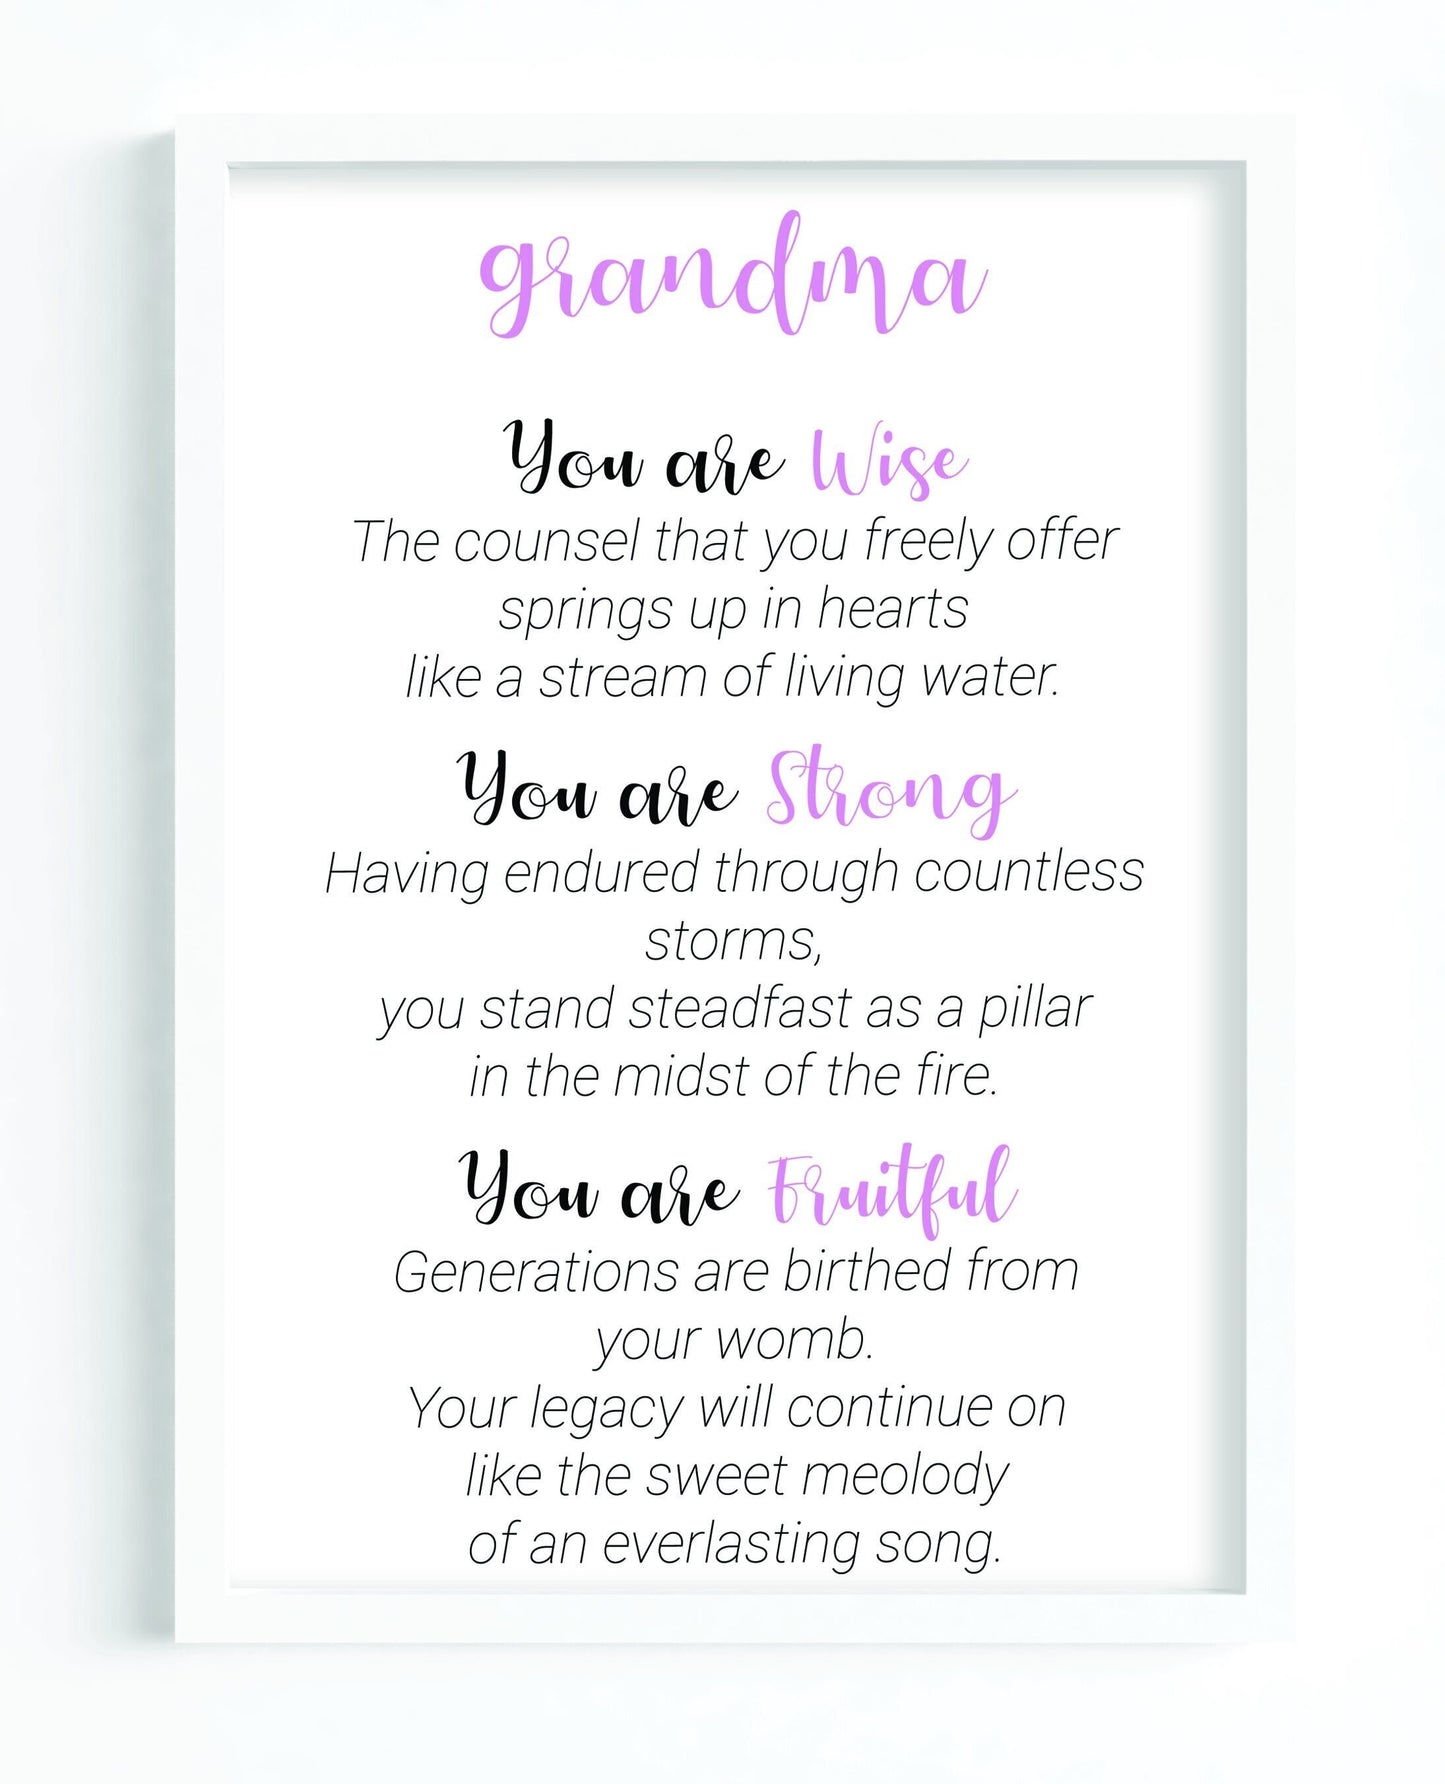 grandma day poems